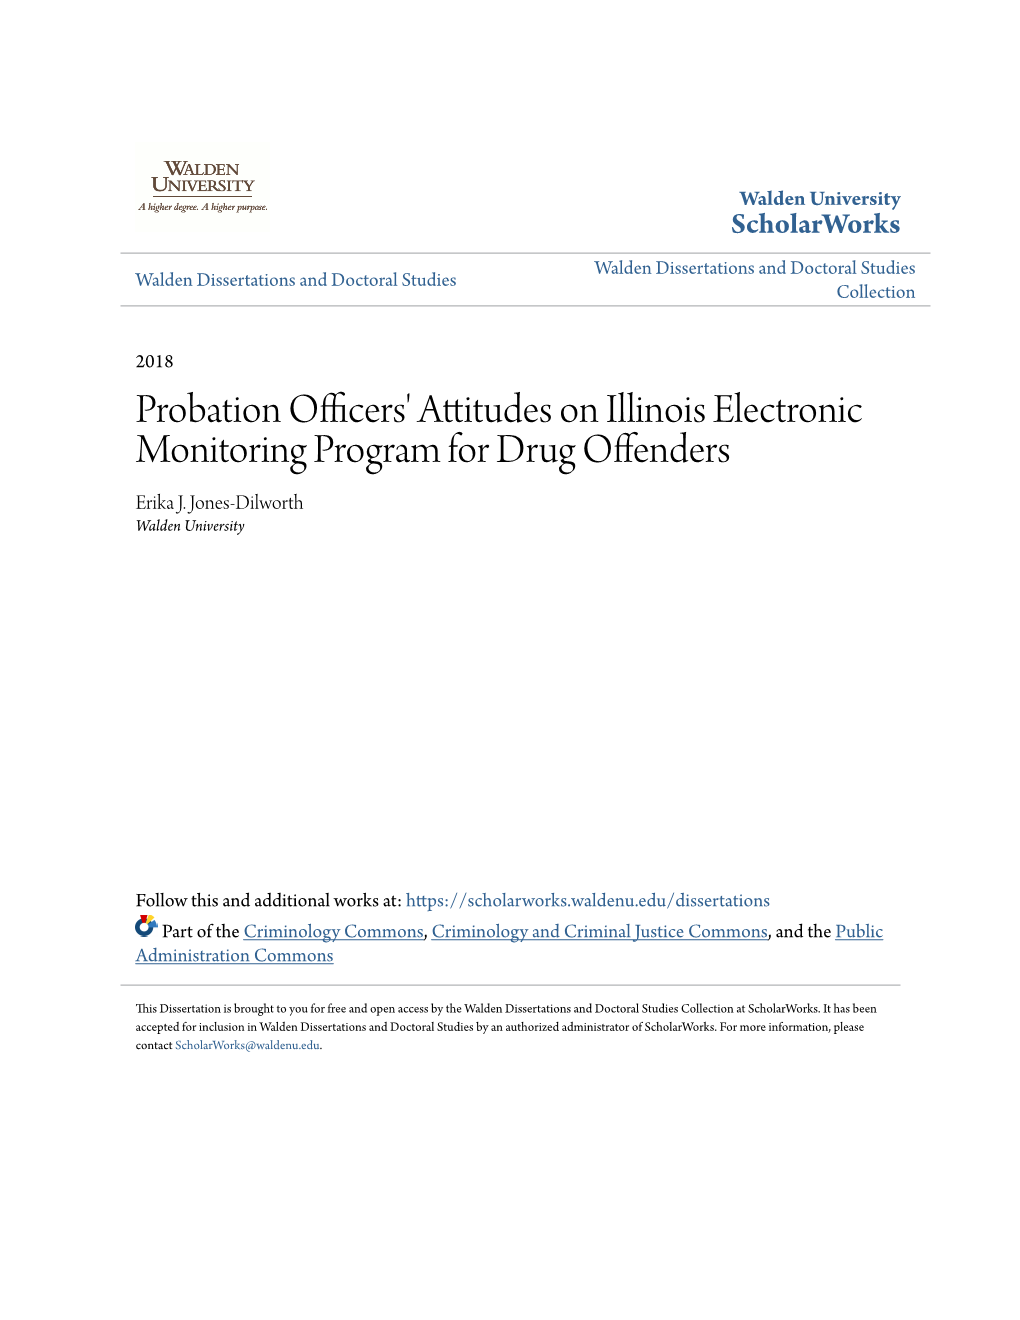 Probation Officers' Attitudes on Illinois Electronic Monitoring Program for Drug Offenders Erika J